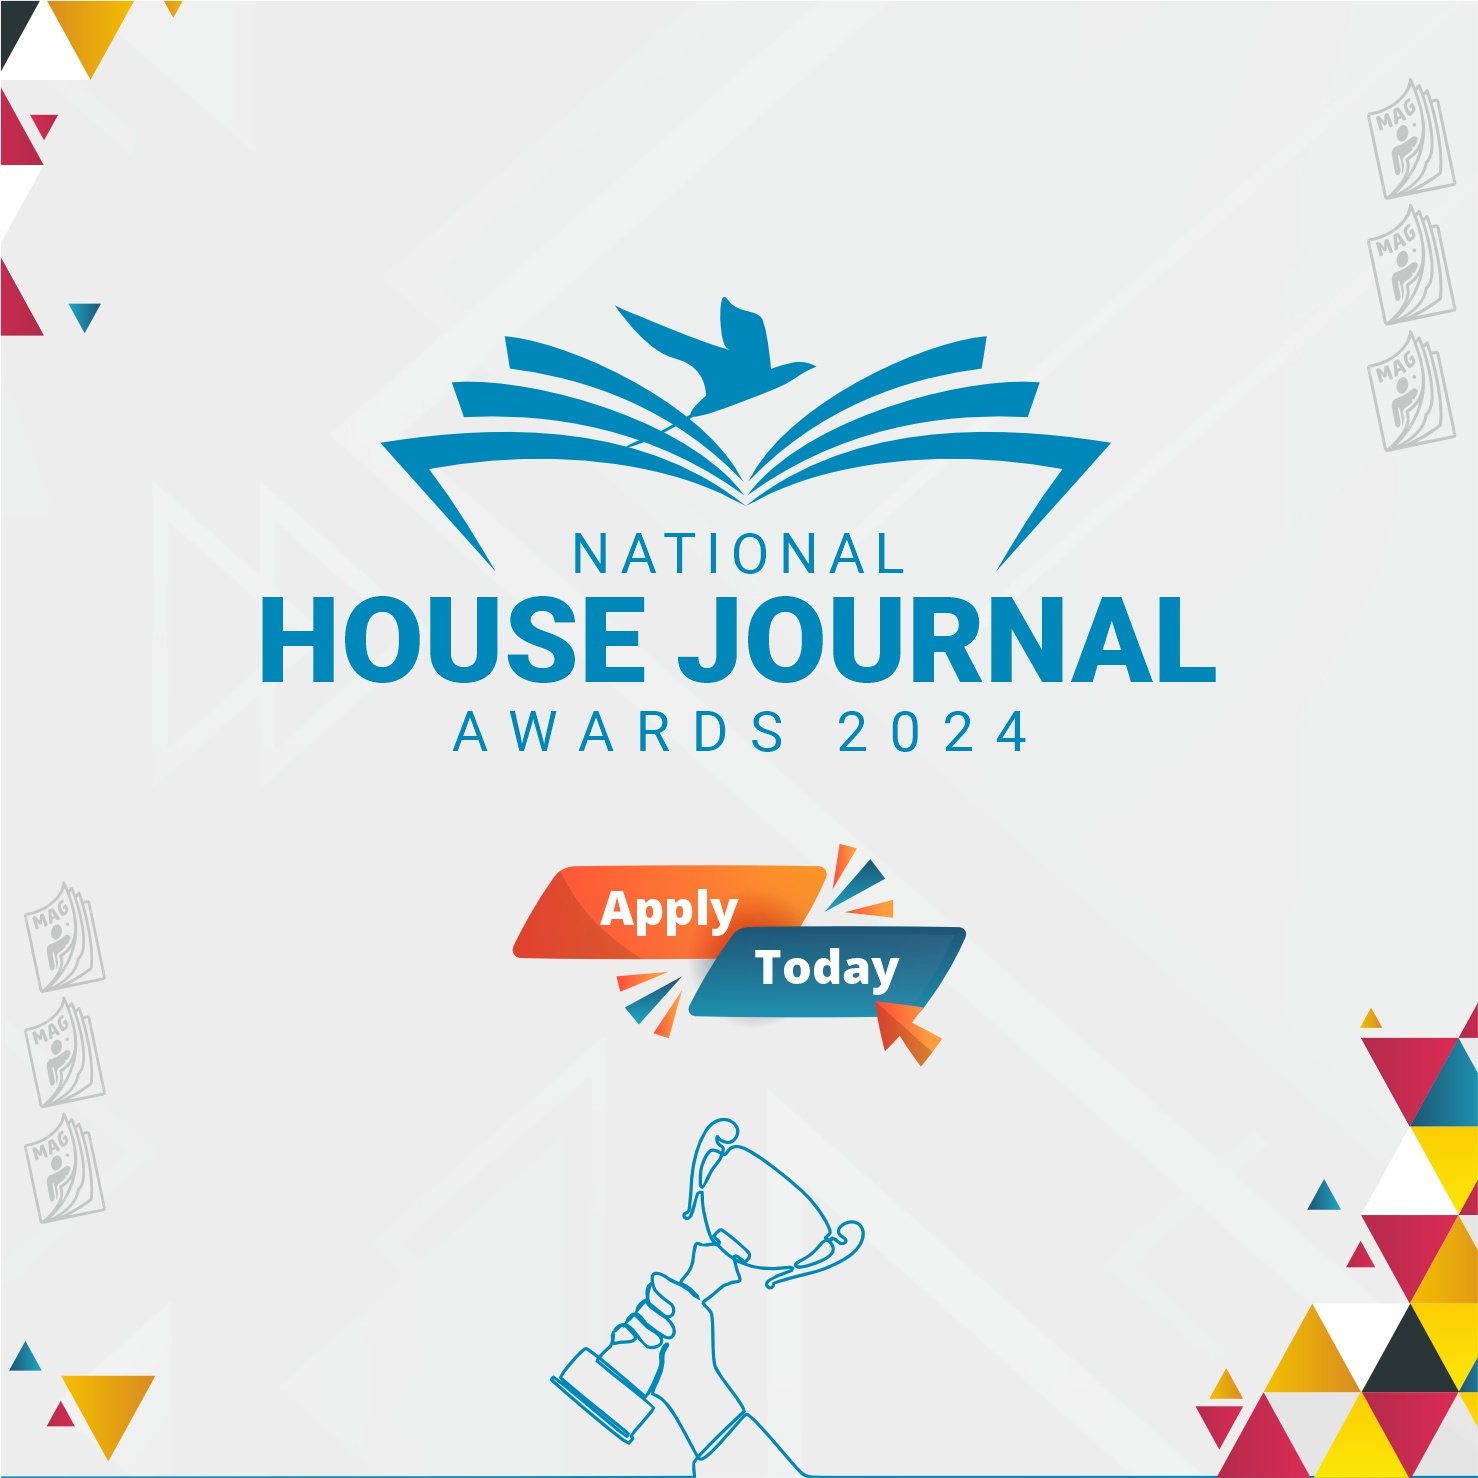 National House Journal Awards 2024